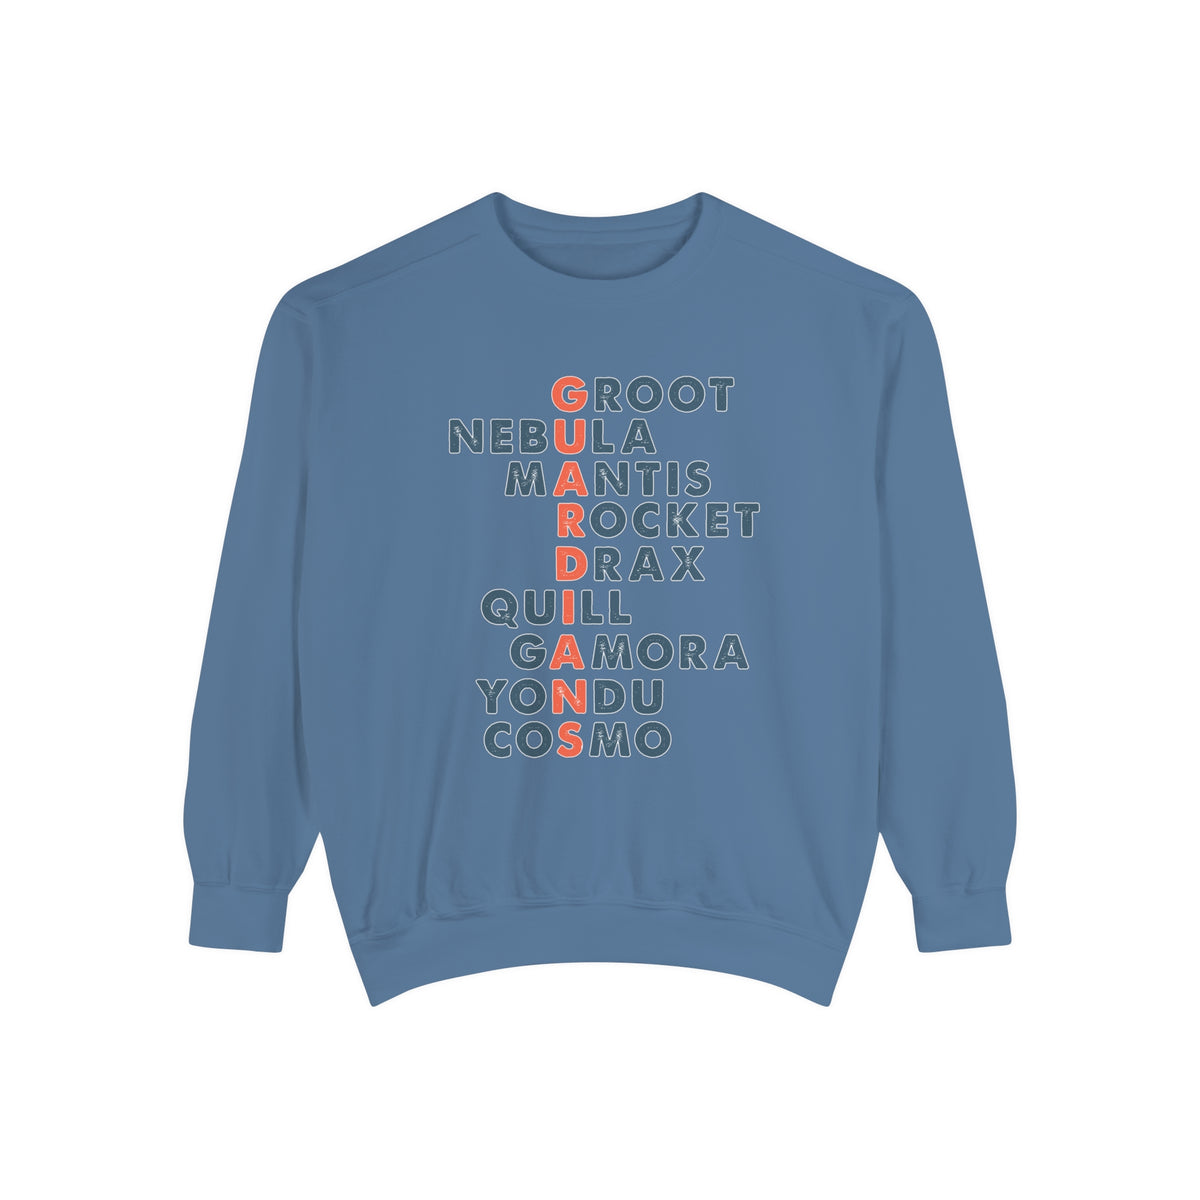 Guardians Unisex Garment-Dyed Sweatshirt